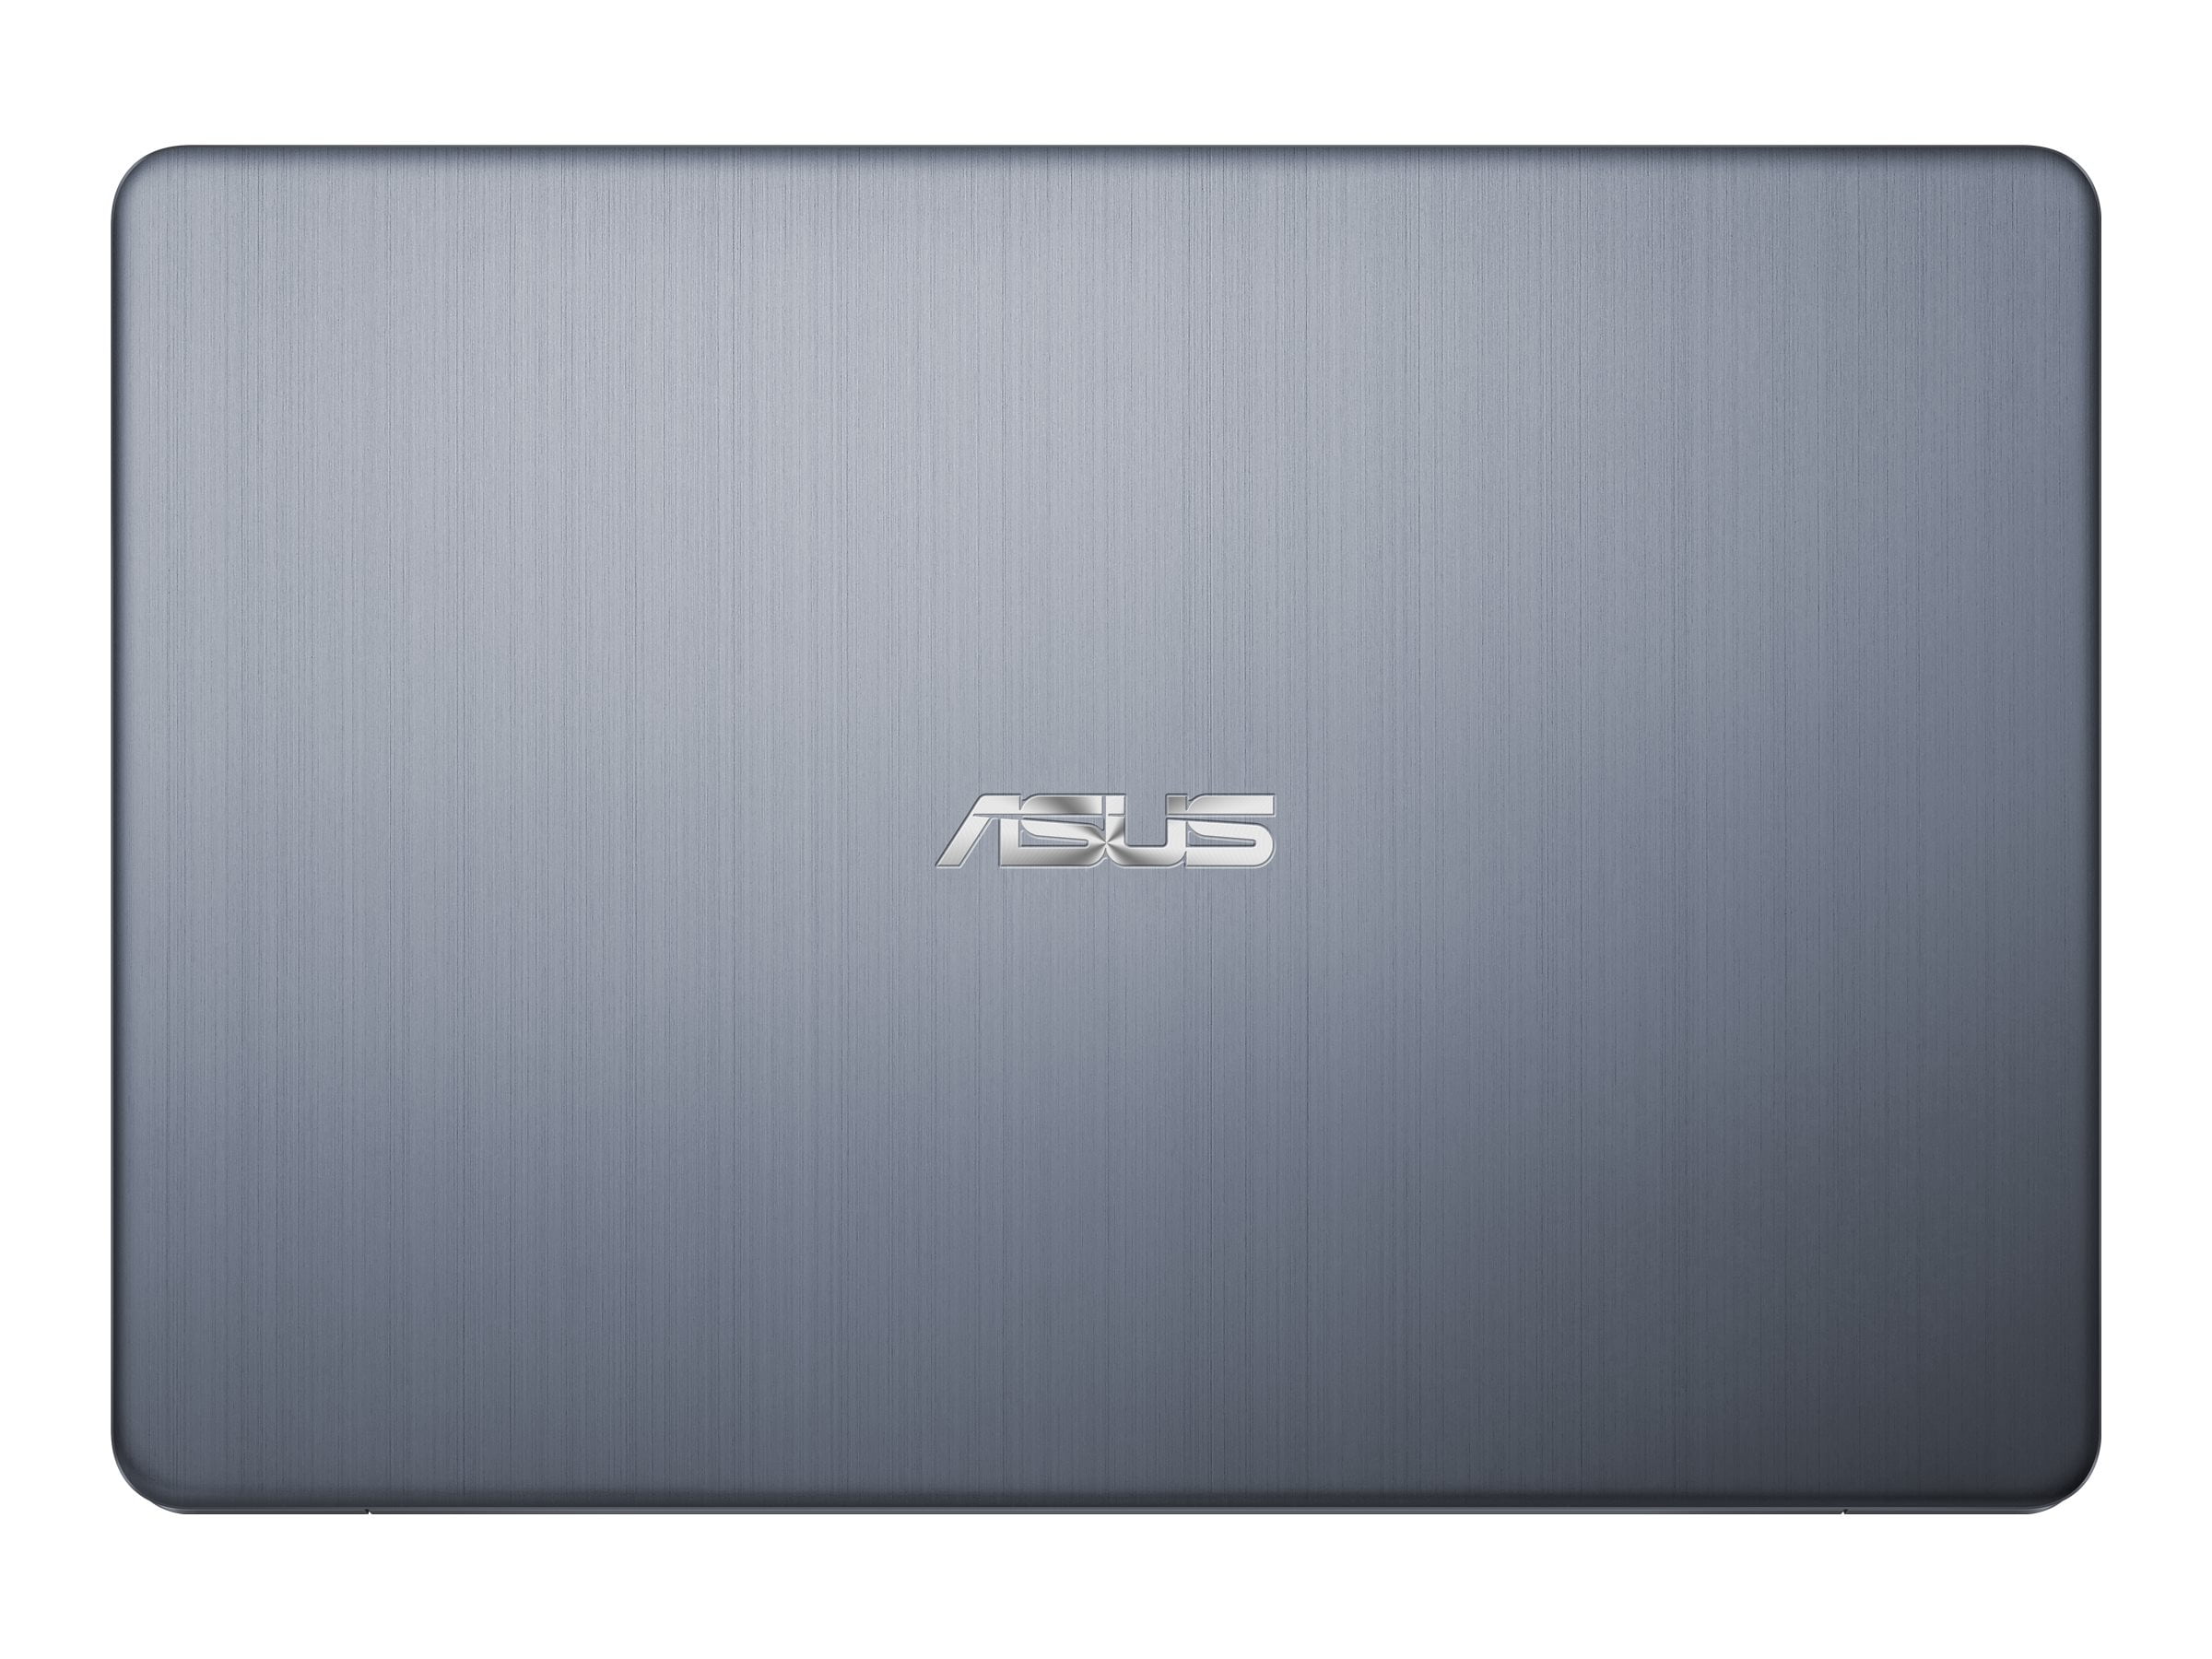 ASUS E406SA DS04 - Intel Celeron N3060 ⁄ 1.6 GHz - Win 10 Home 64-bit - HD  Graphics 400 - 4 GB RAM - 64 GB eMMC - 14" 1920 x 1080 (Full HD) - Wi-Fi 5  - star gray